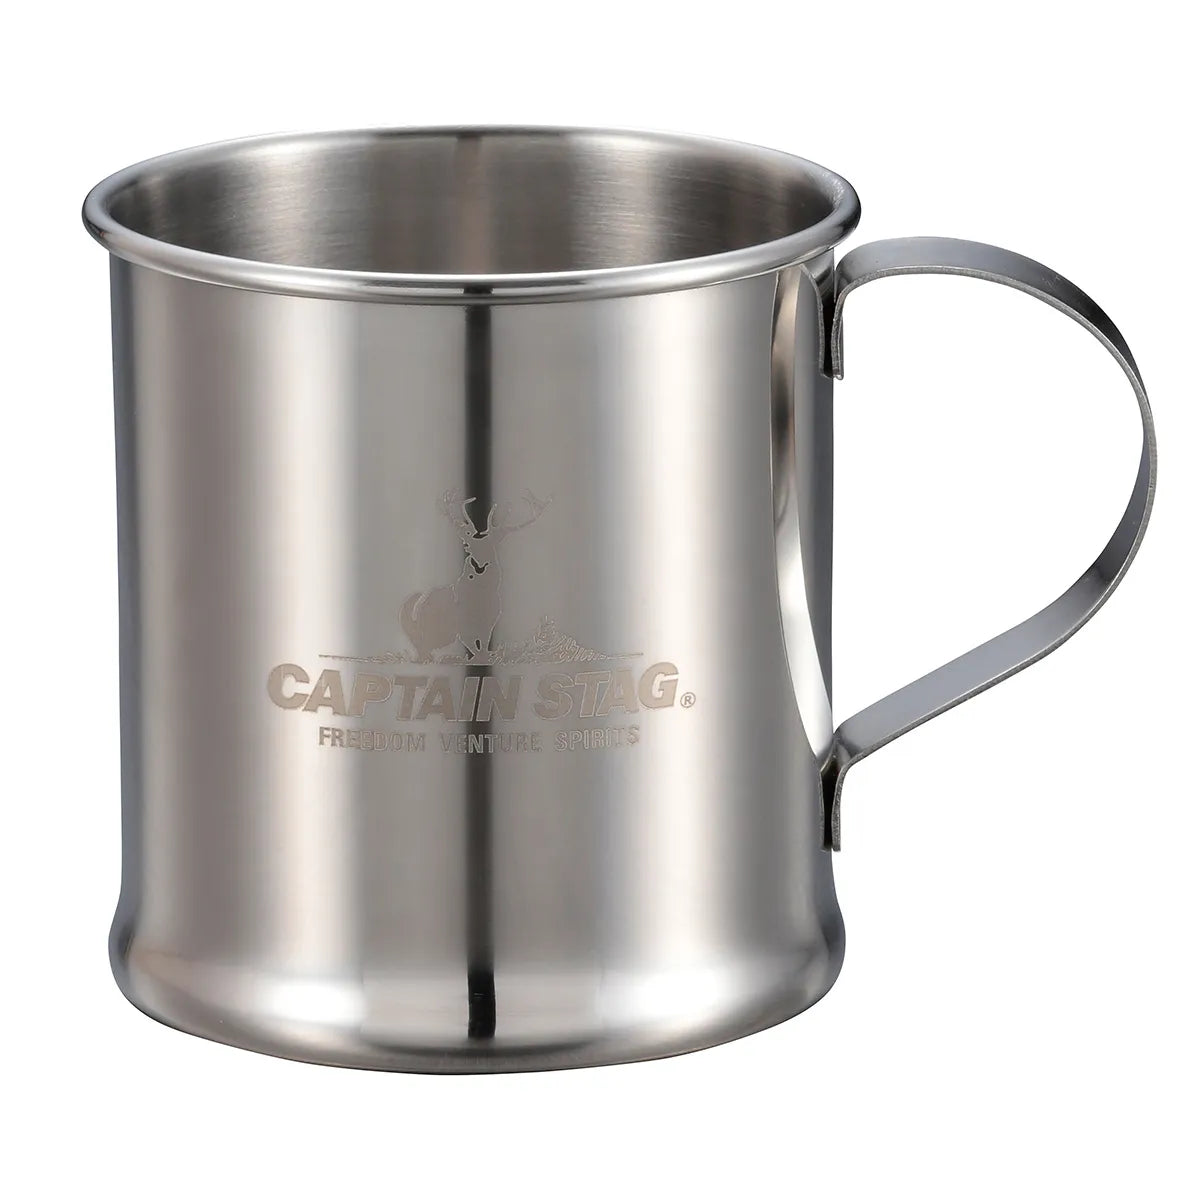 captain-stag-stainless-steel-mug-不銹鋼杯-310ml-uh-2014的第1張產品相片